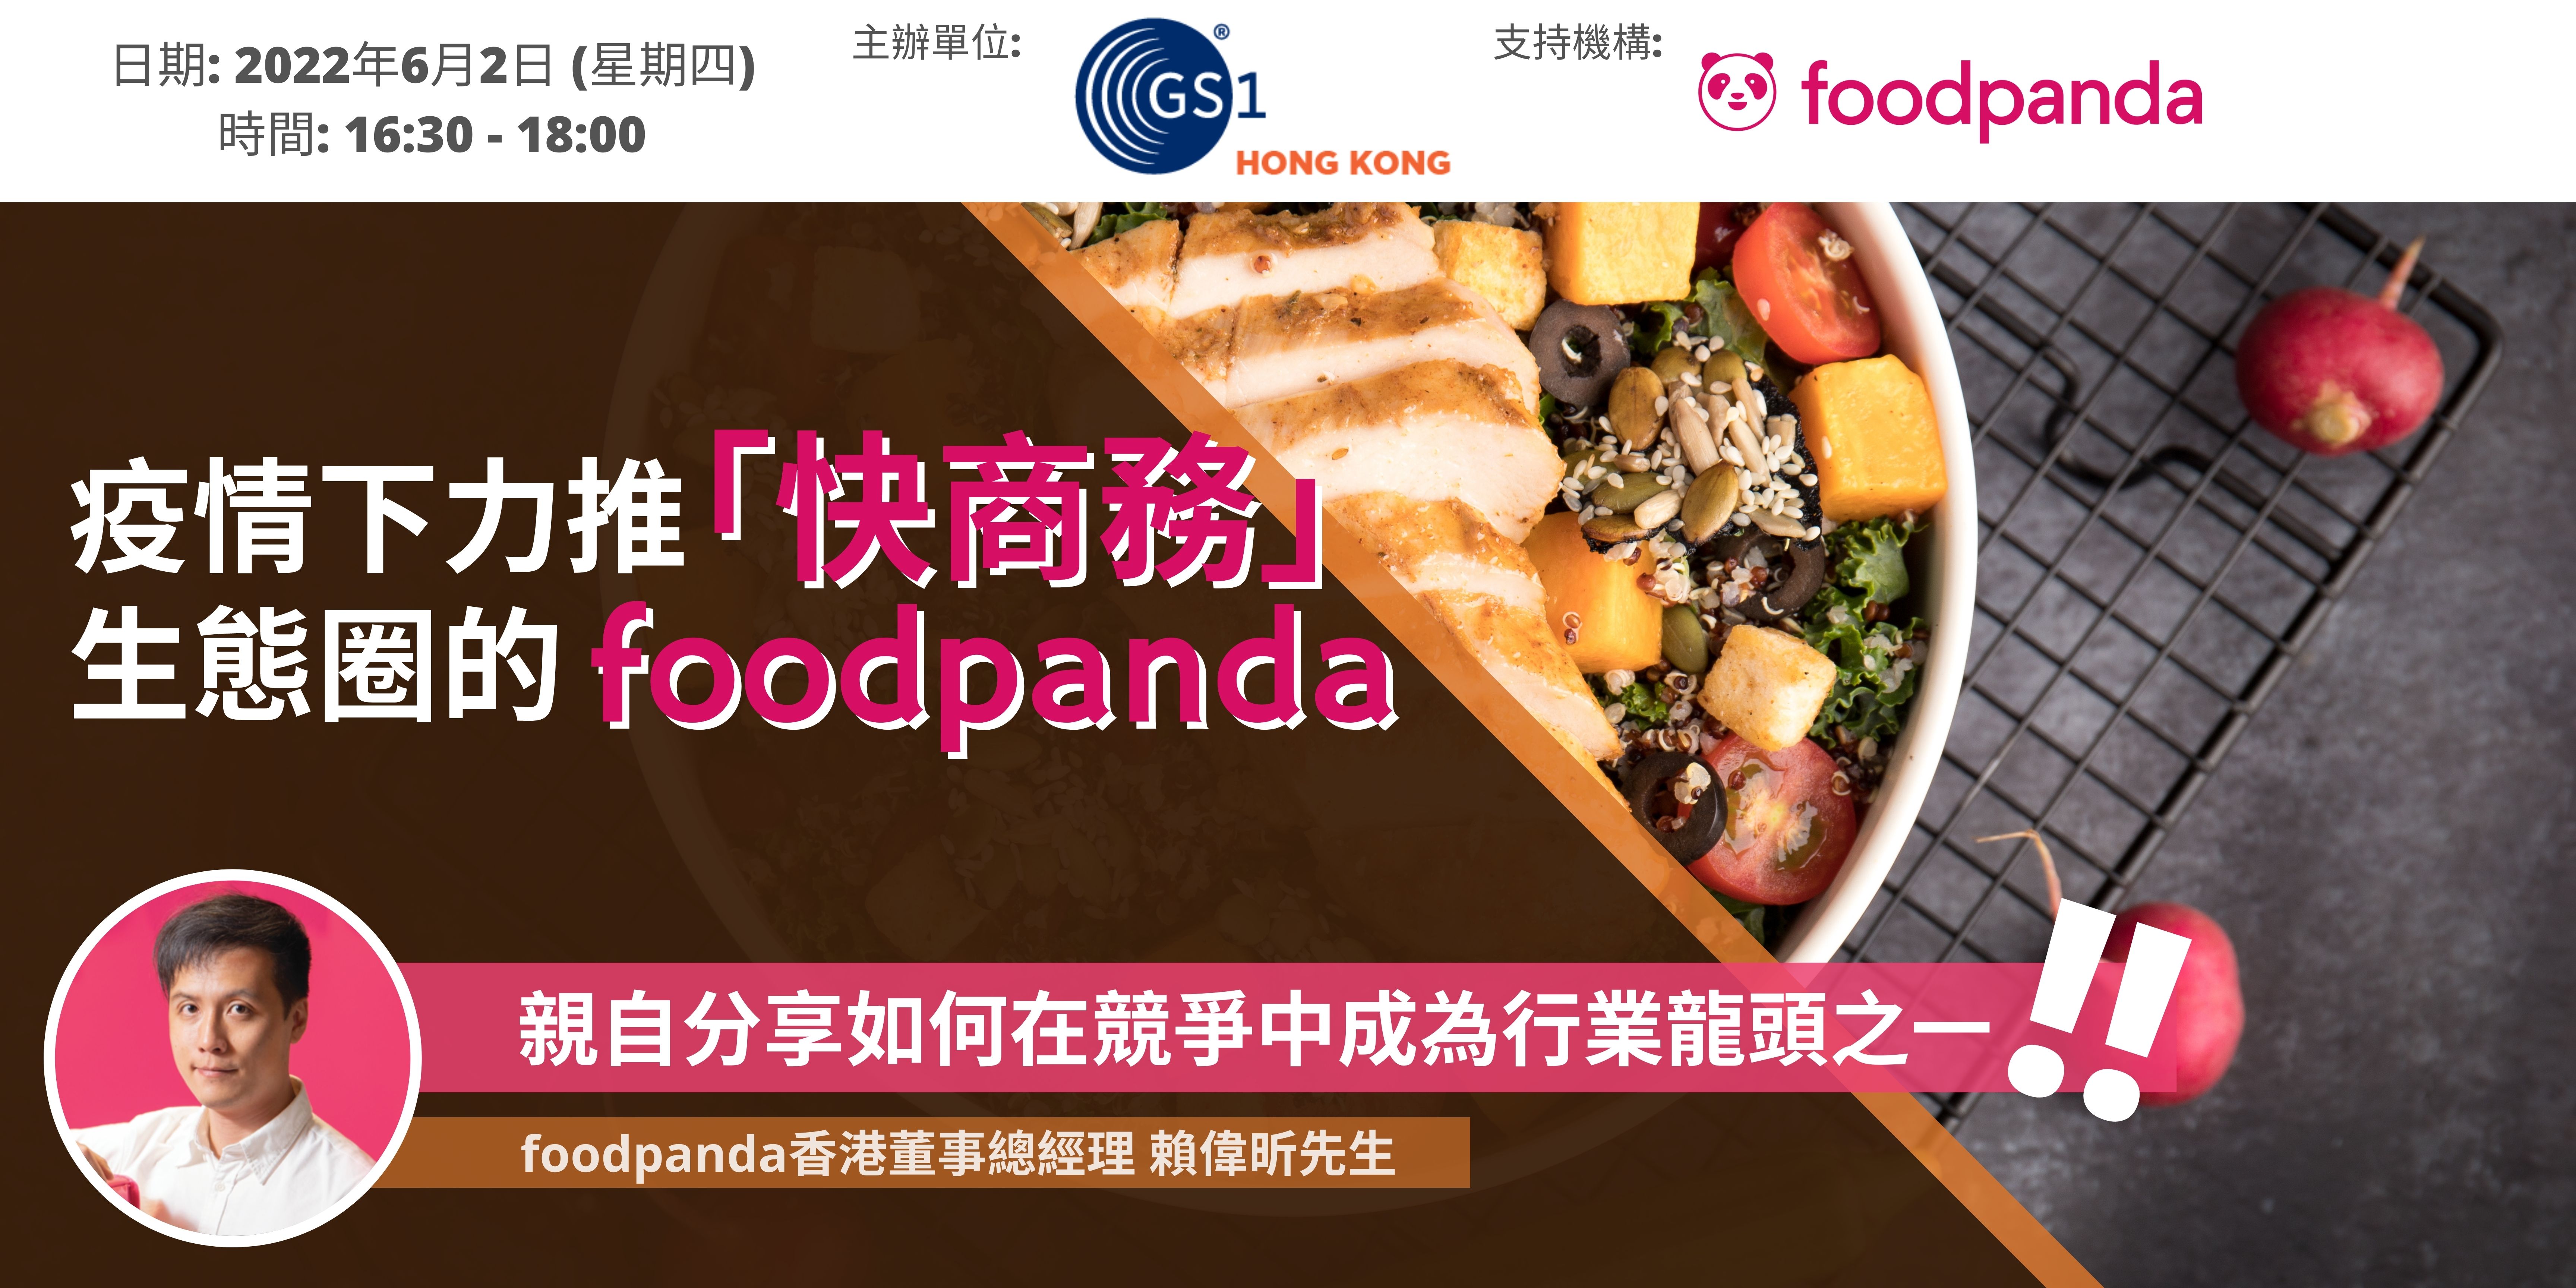 Food panda seminar